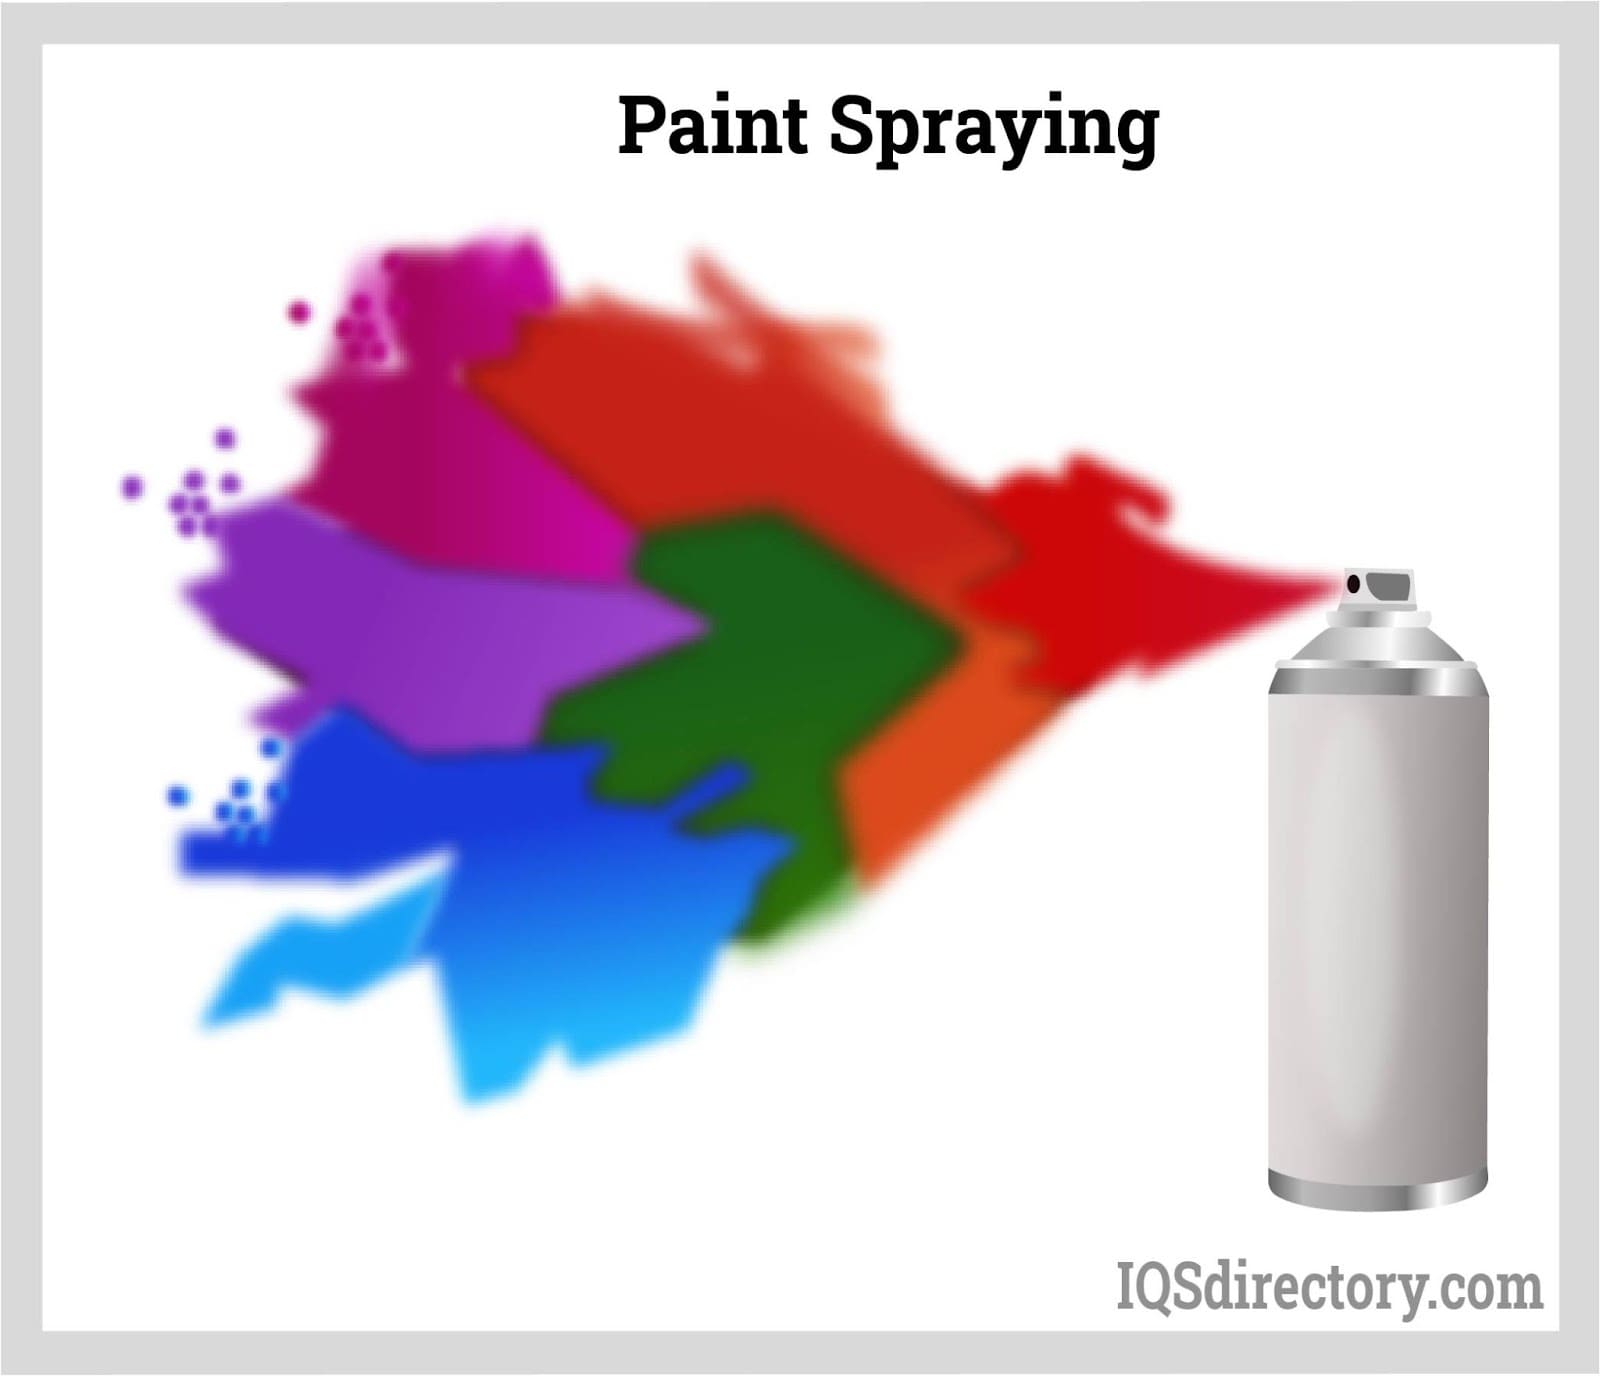 Paint Spraying